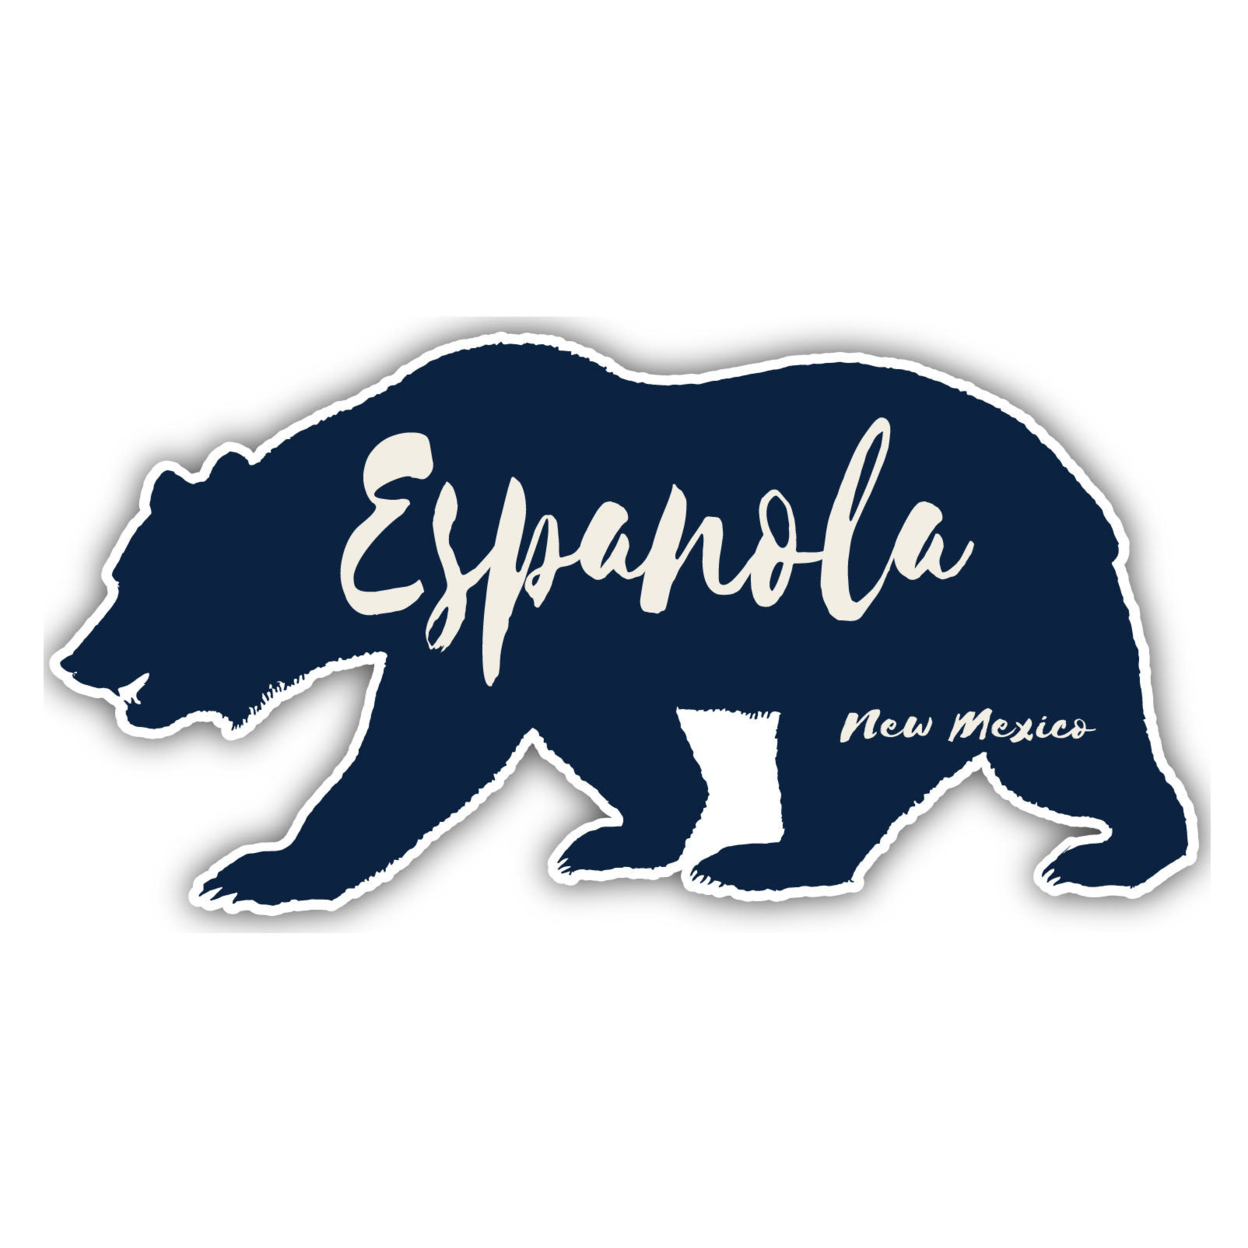 Espanola New Mexico Souvenir Decorative Stickers (Choose Theme And Size) - Single Unit, 10-Inch, Bear